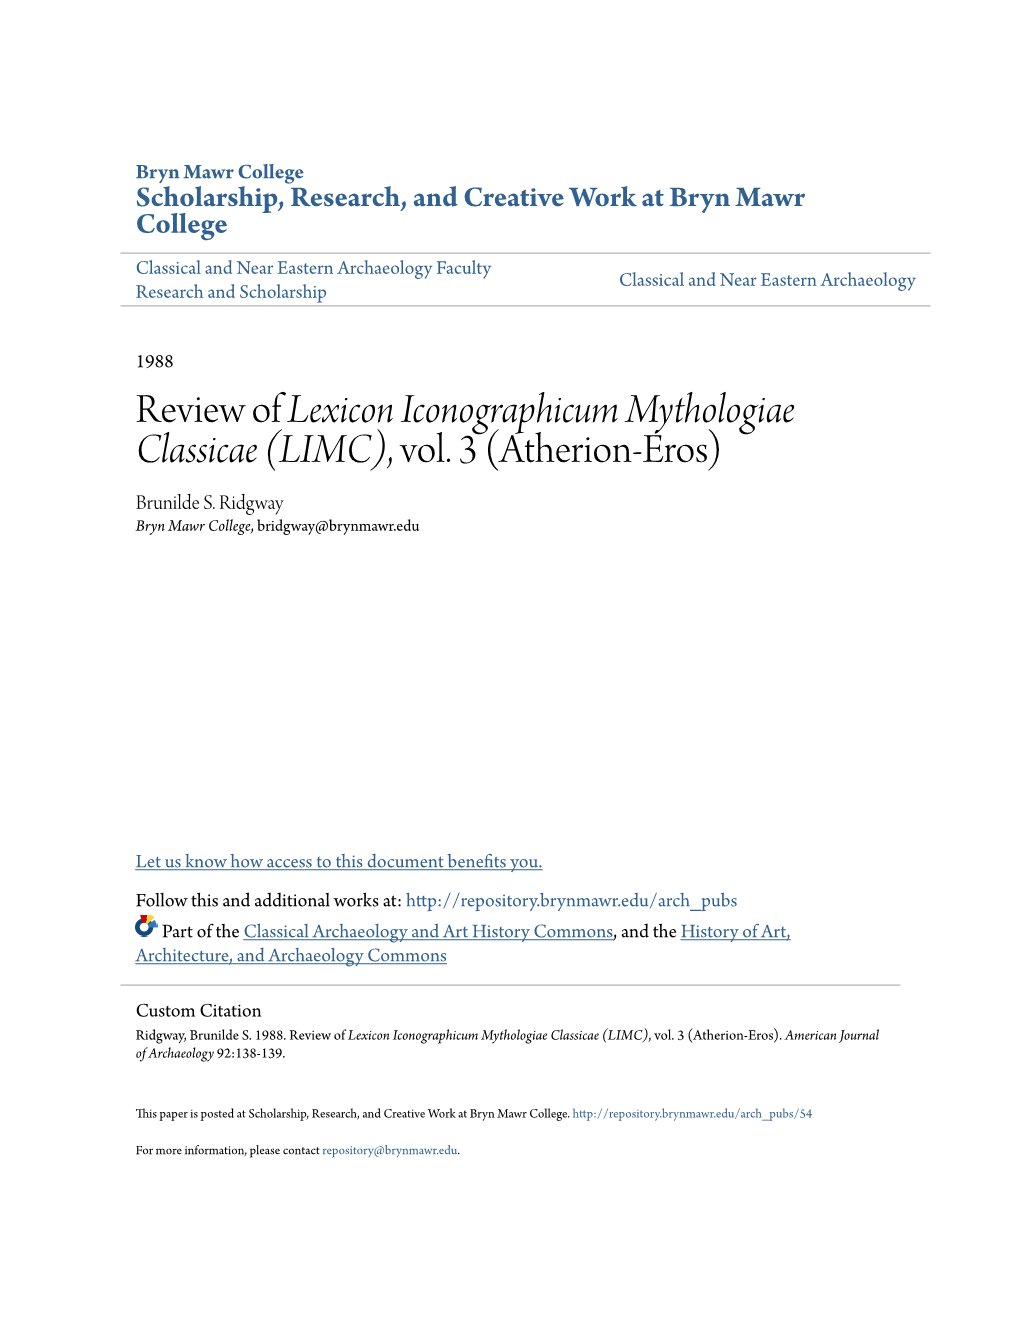 Review of Lexicon Iconographicum Mythologiae Classicae (LIMC), Vol